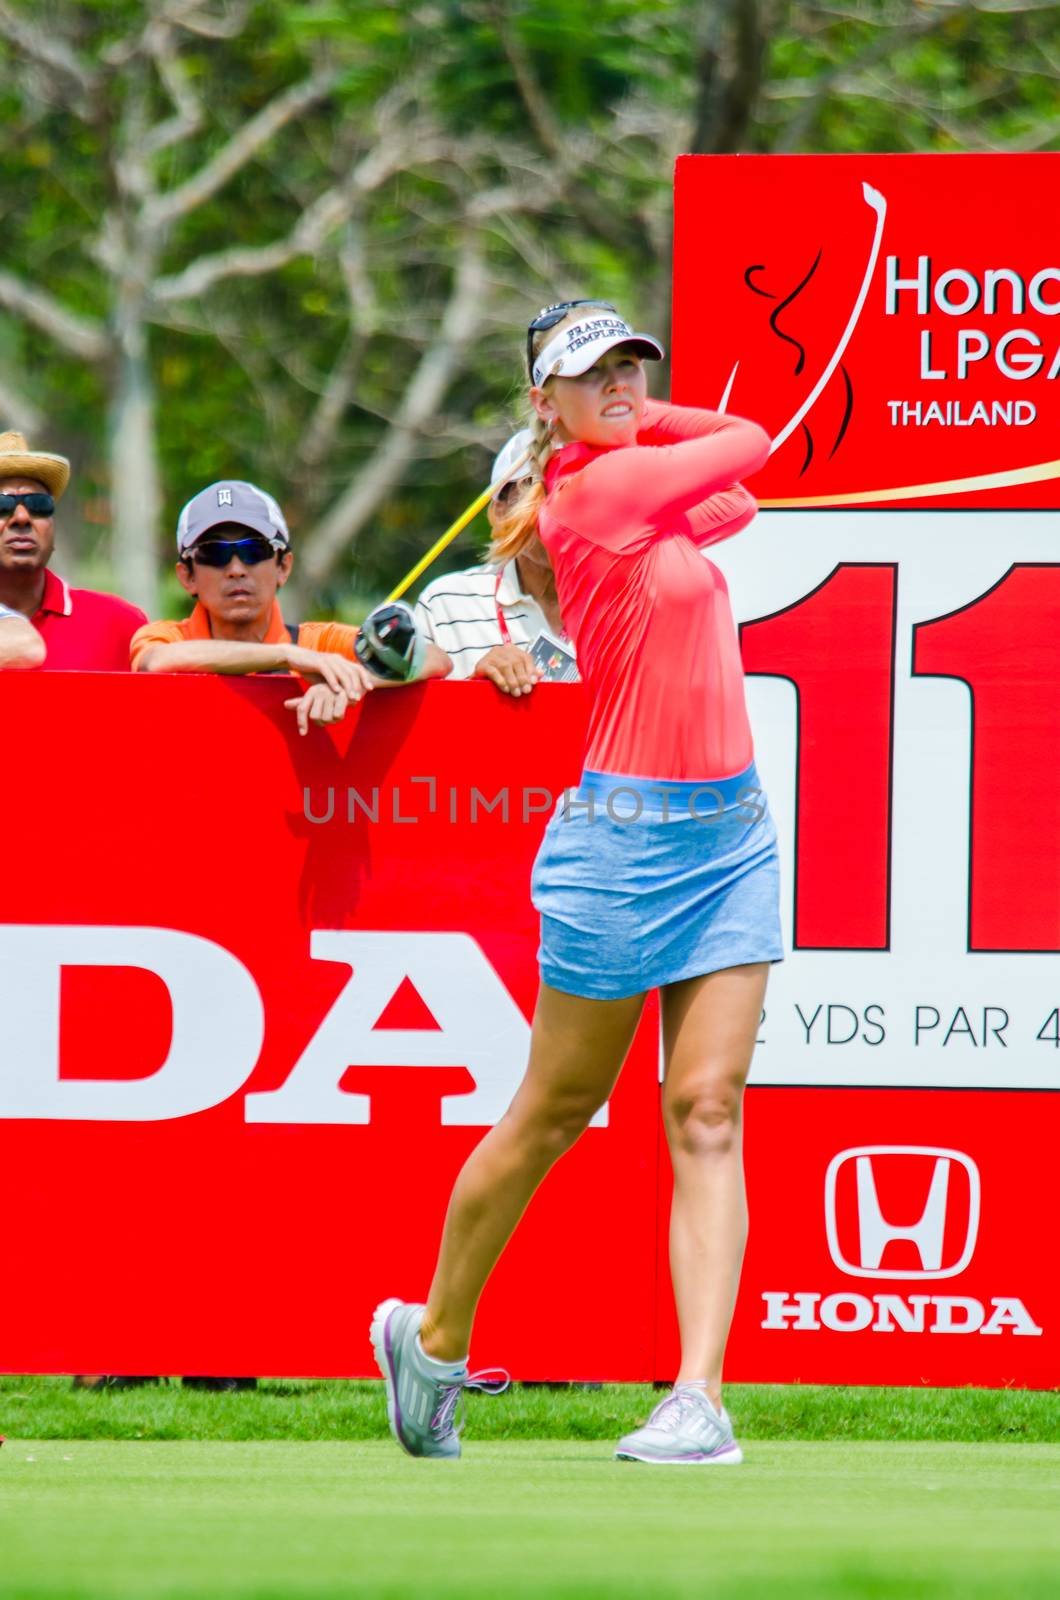 CHONBURI - FEBRUARY 28: Jessica Korda of USA in Honda LPGA Thailand 2015 at Siam Country Club, Pattaya Old Course on February 28, 2015 in Chonburi, Thailand.